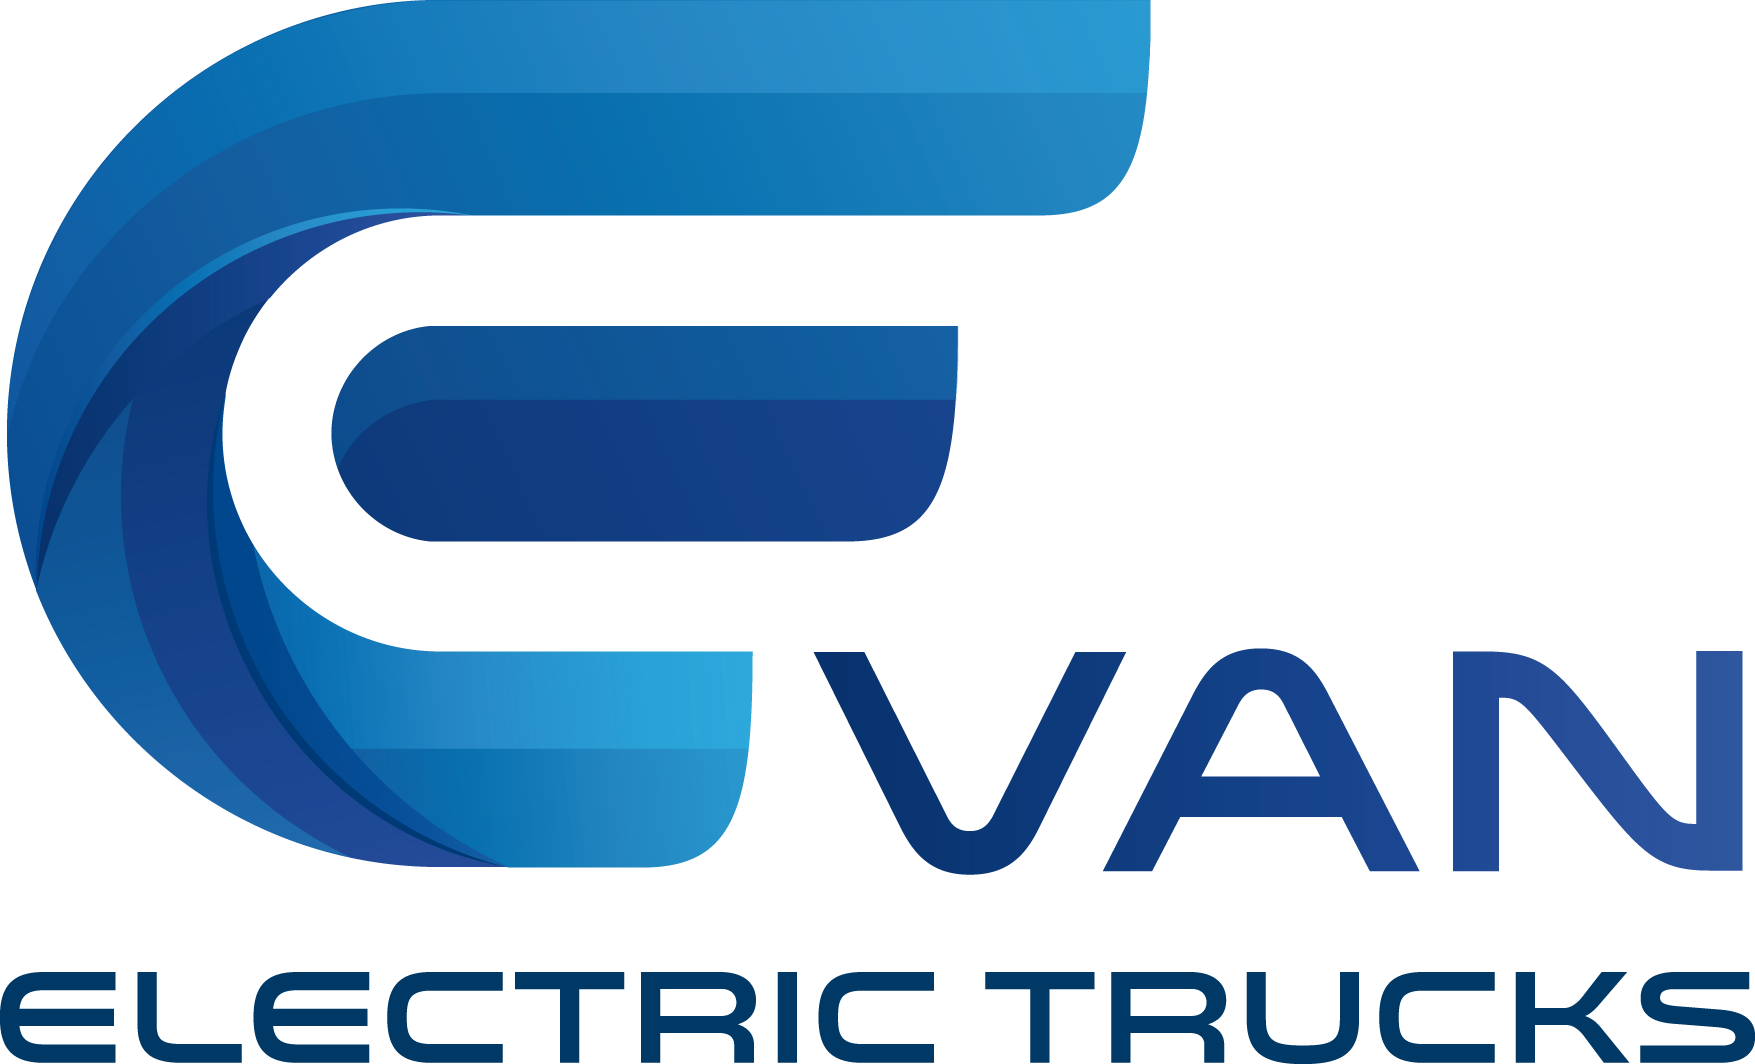 EVAN_electrictrucks__logo.png